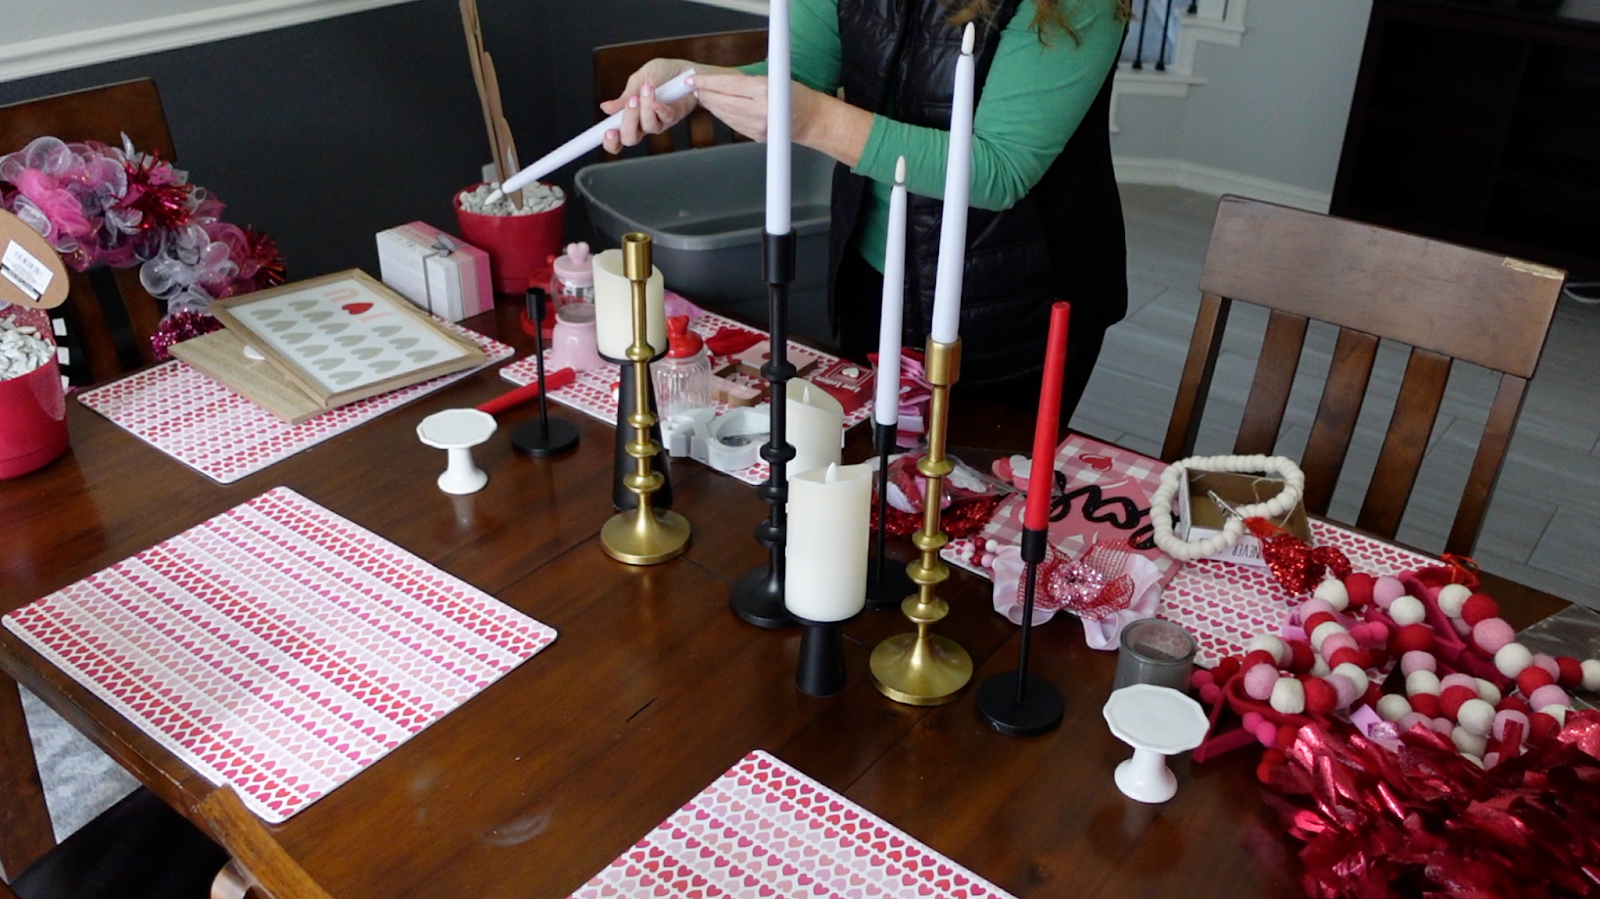 Lindsay sorting candles